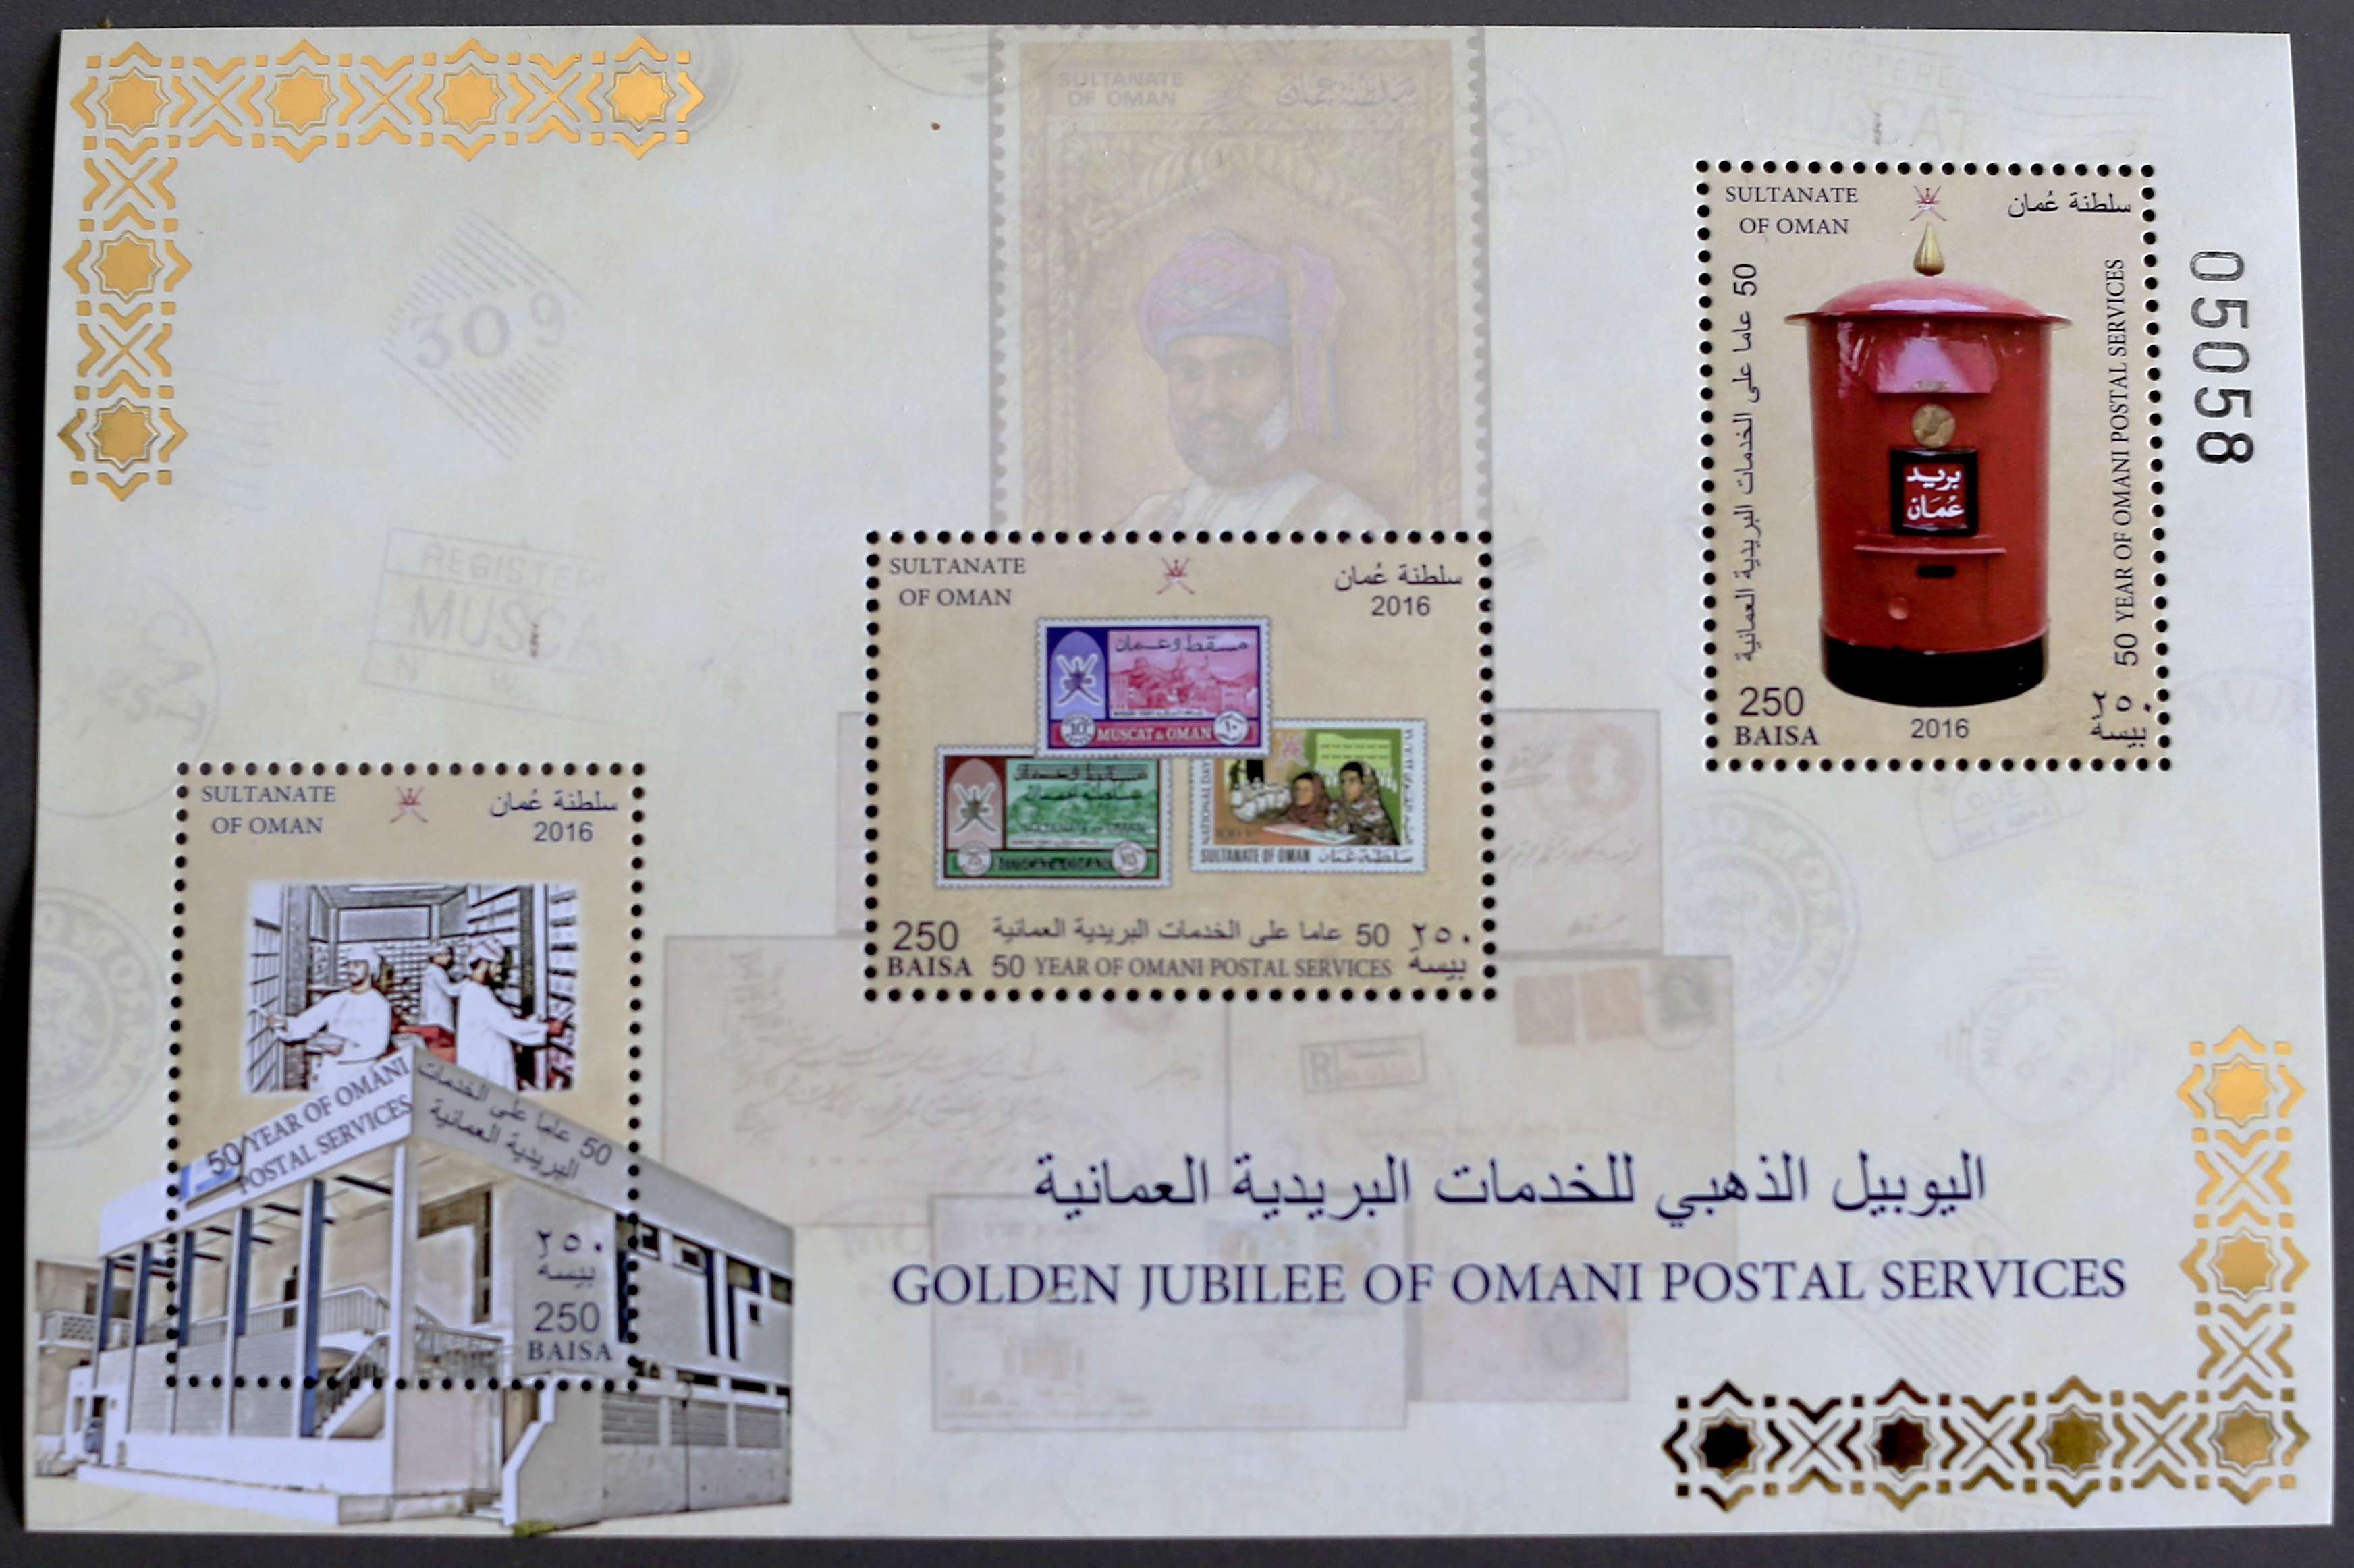 Oman Post’s golden jubilee stamps